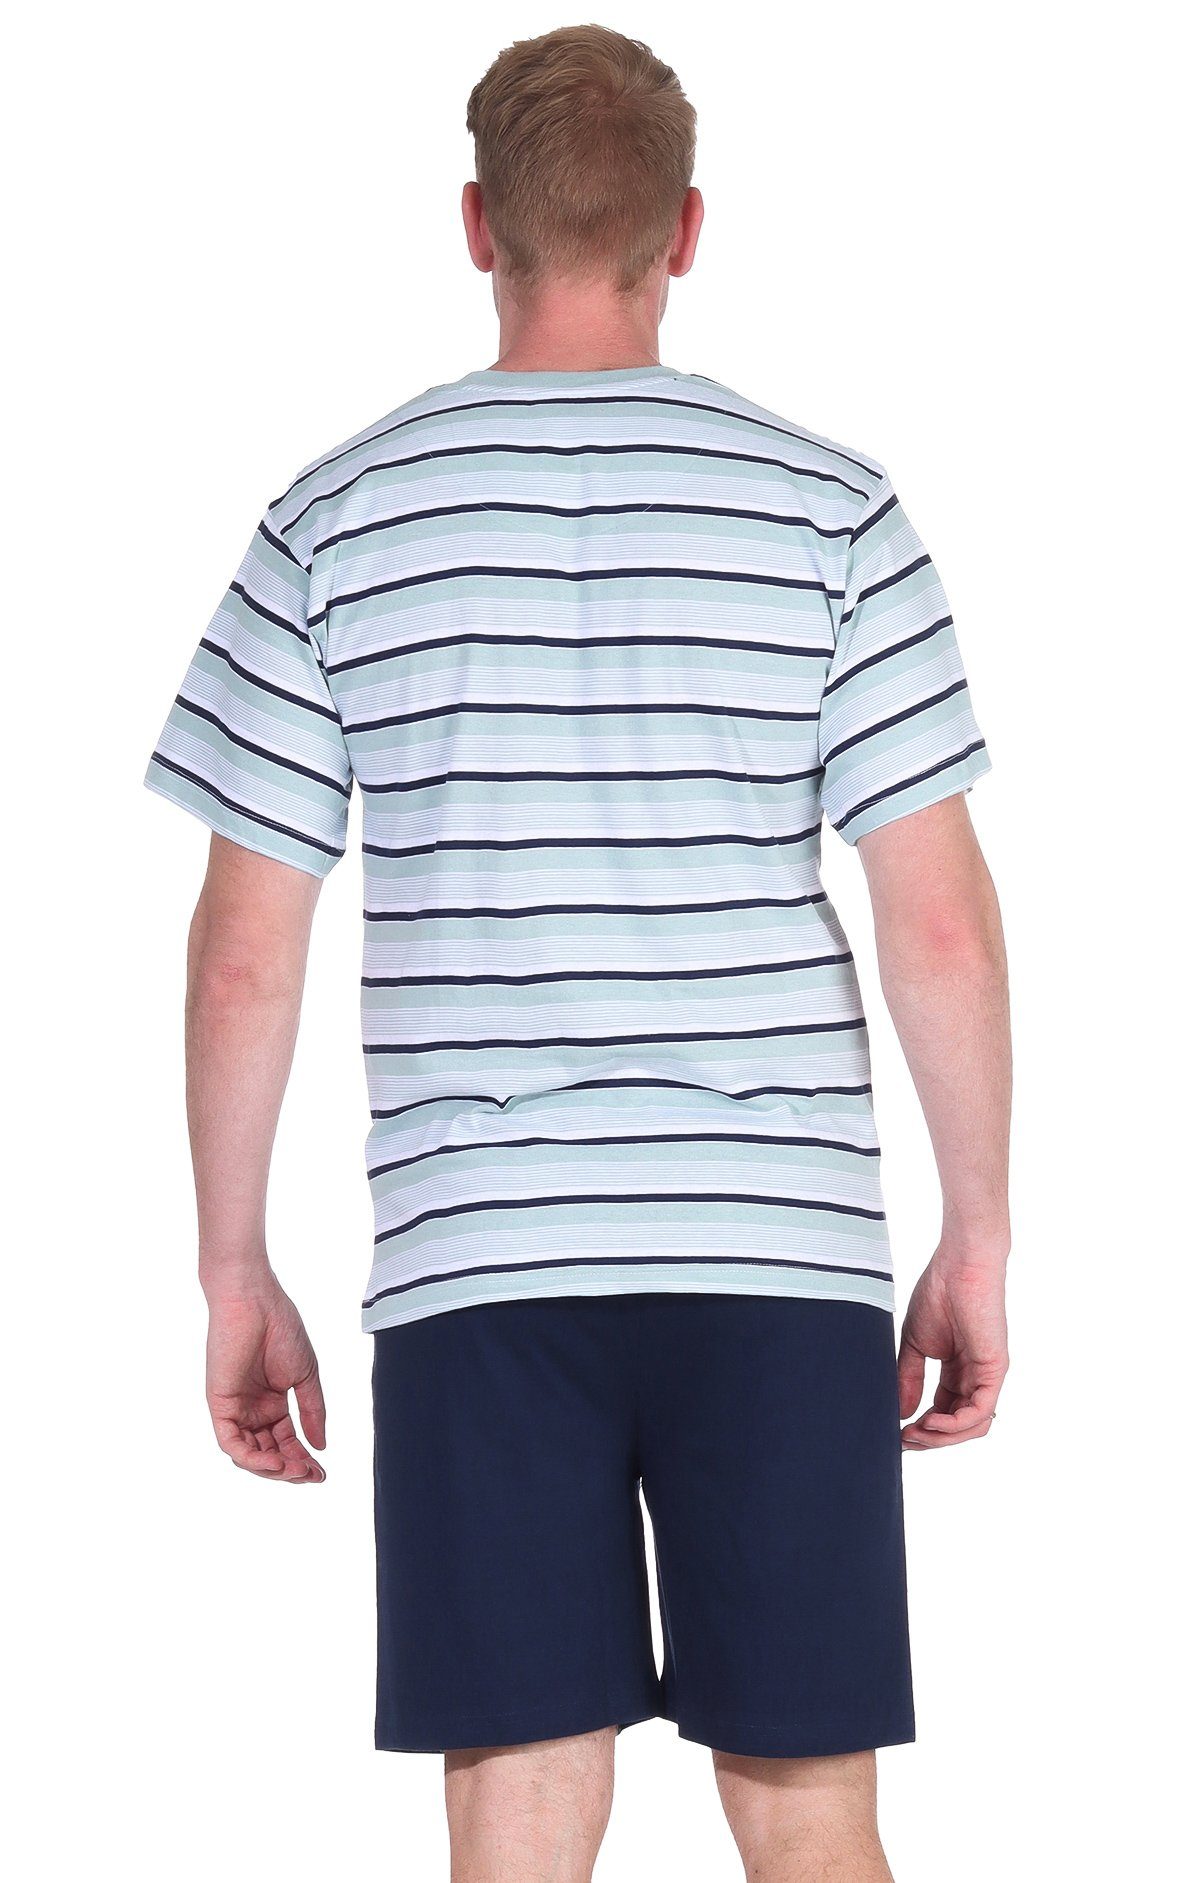 Moonline Shorty Herren Shorty mit V-Ausschnitt 100% Baumwolle Single-Jersey Kurzarm Schlafanzug Aqua